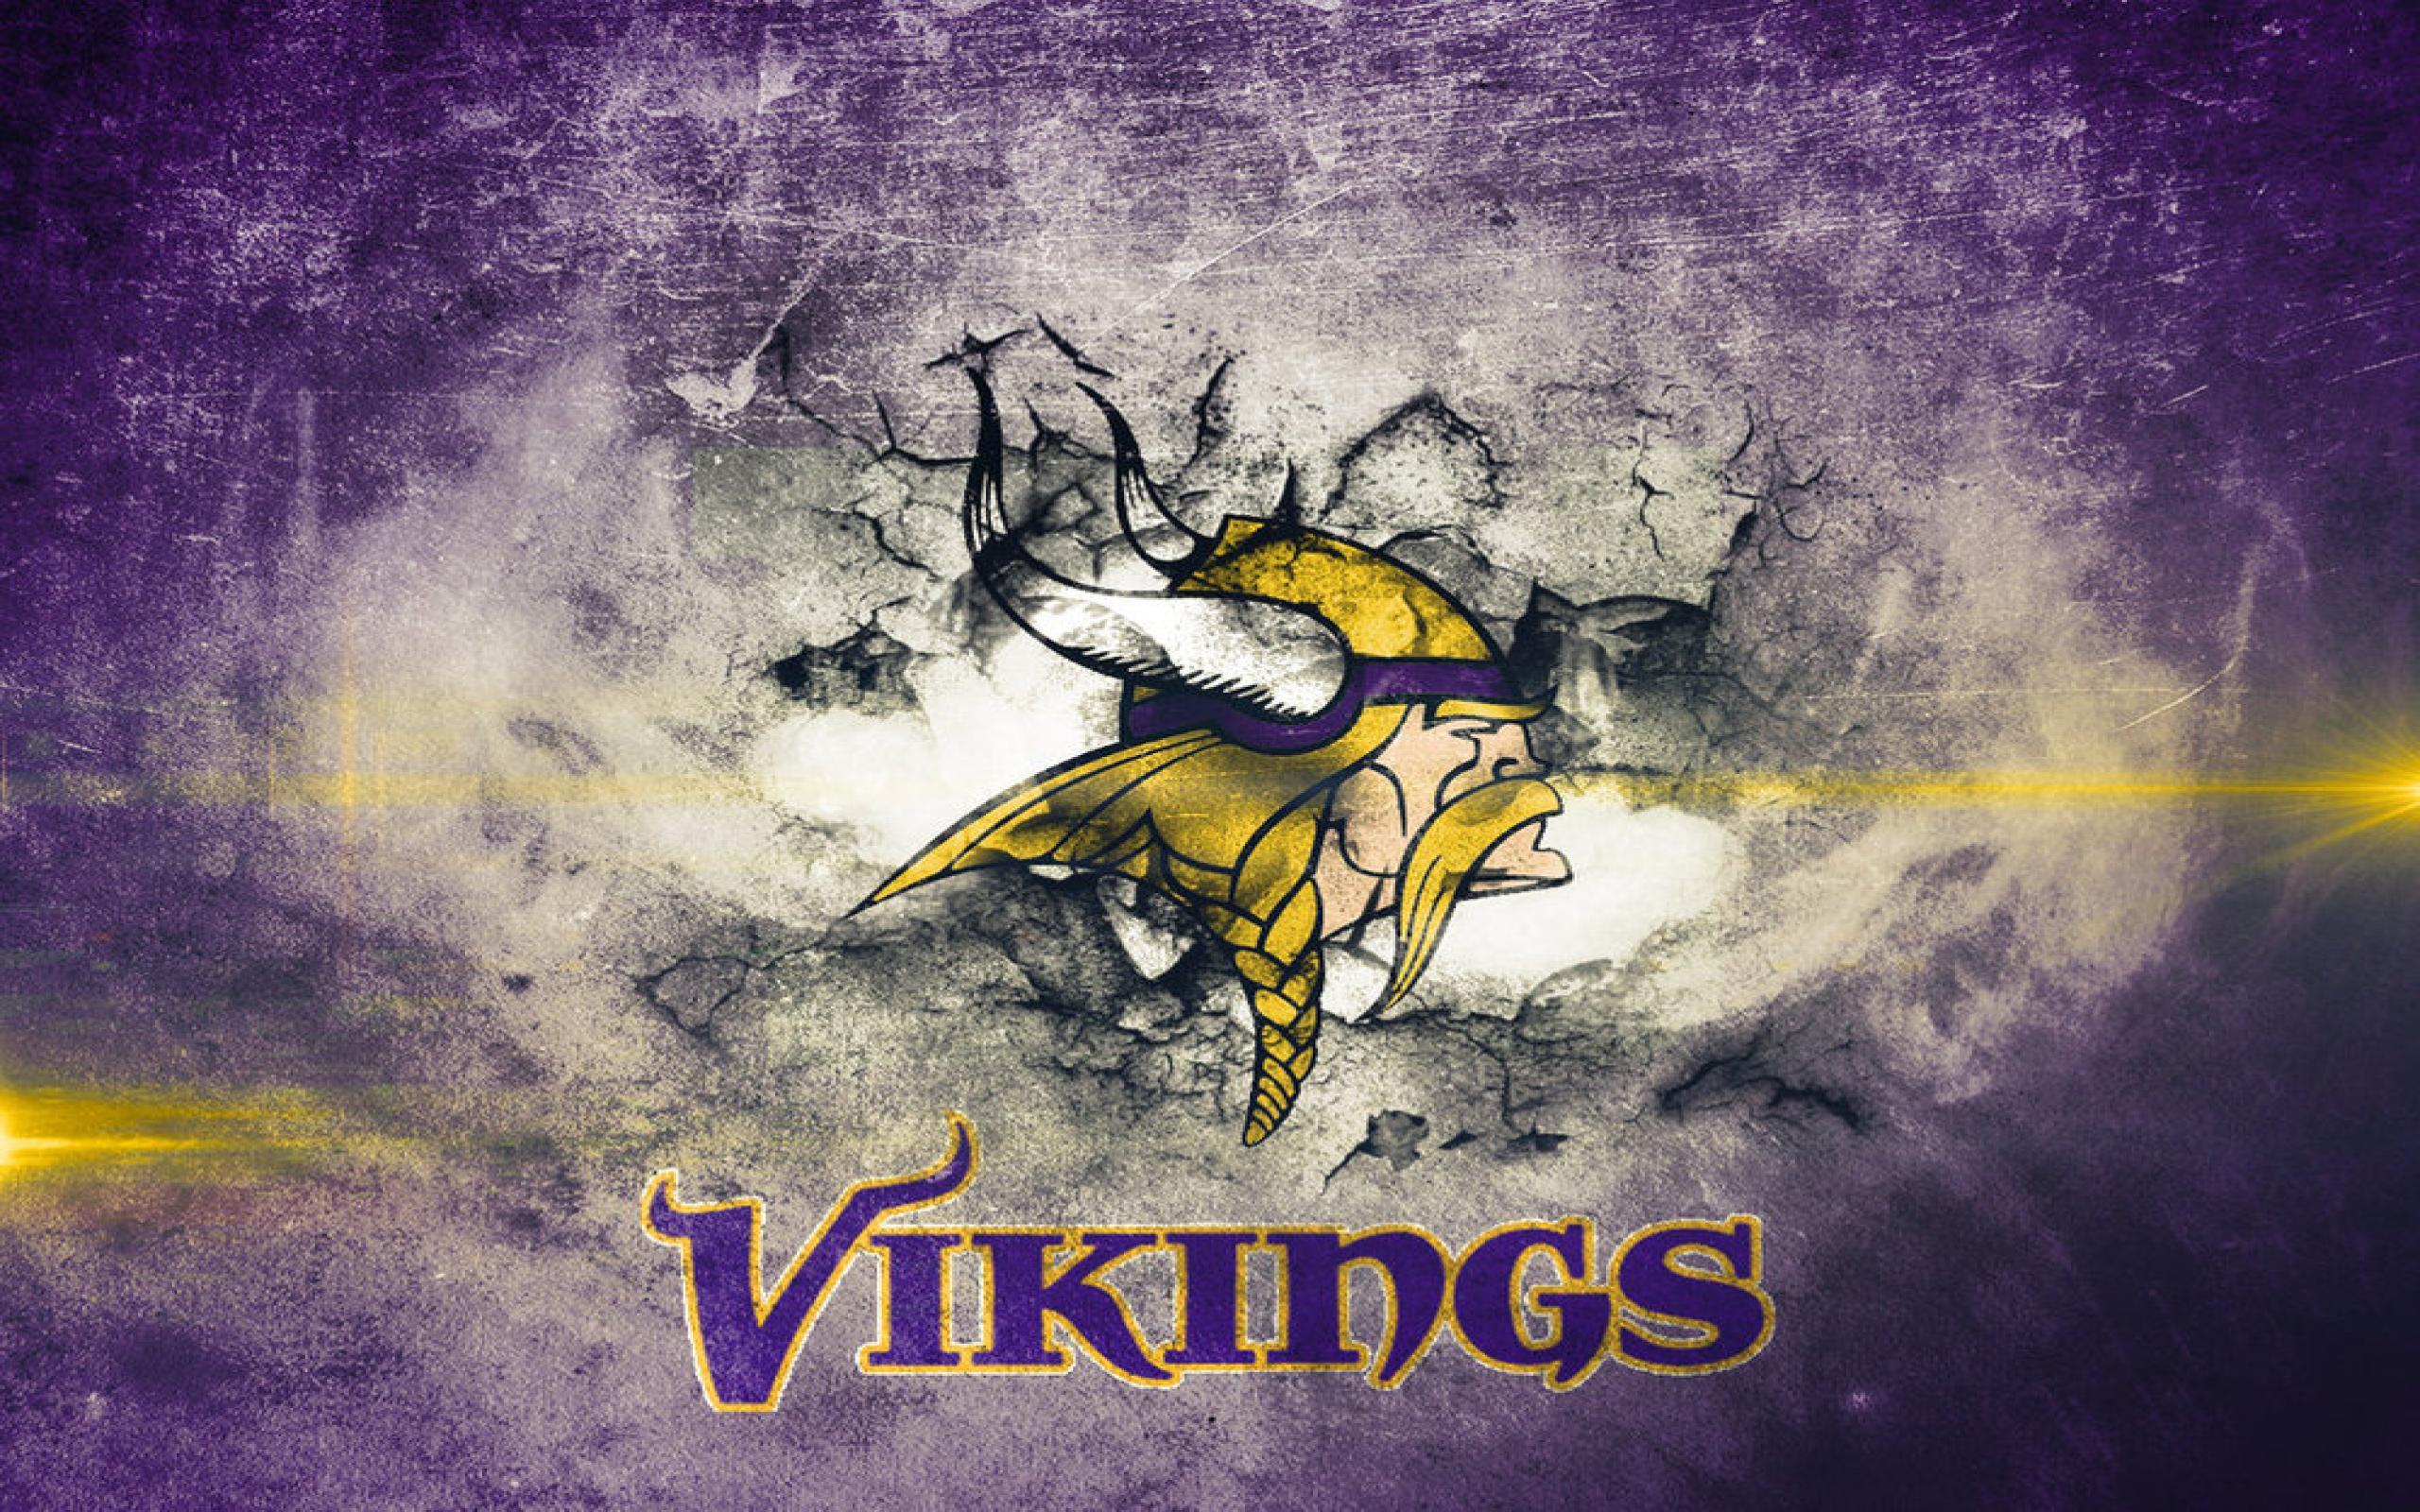 Minnesota Vikings 2019 Schedule Wallpapers - Wallpaper Cave